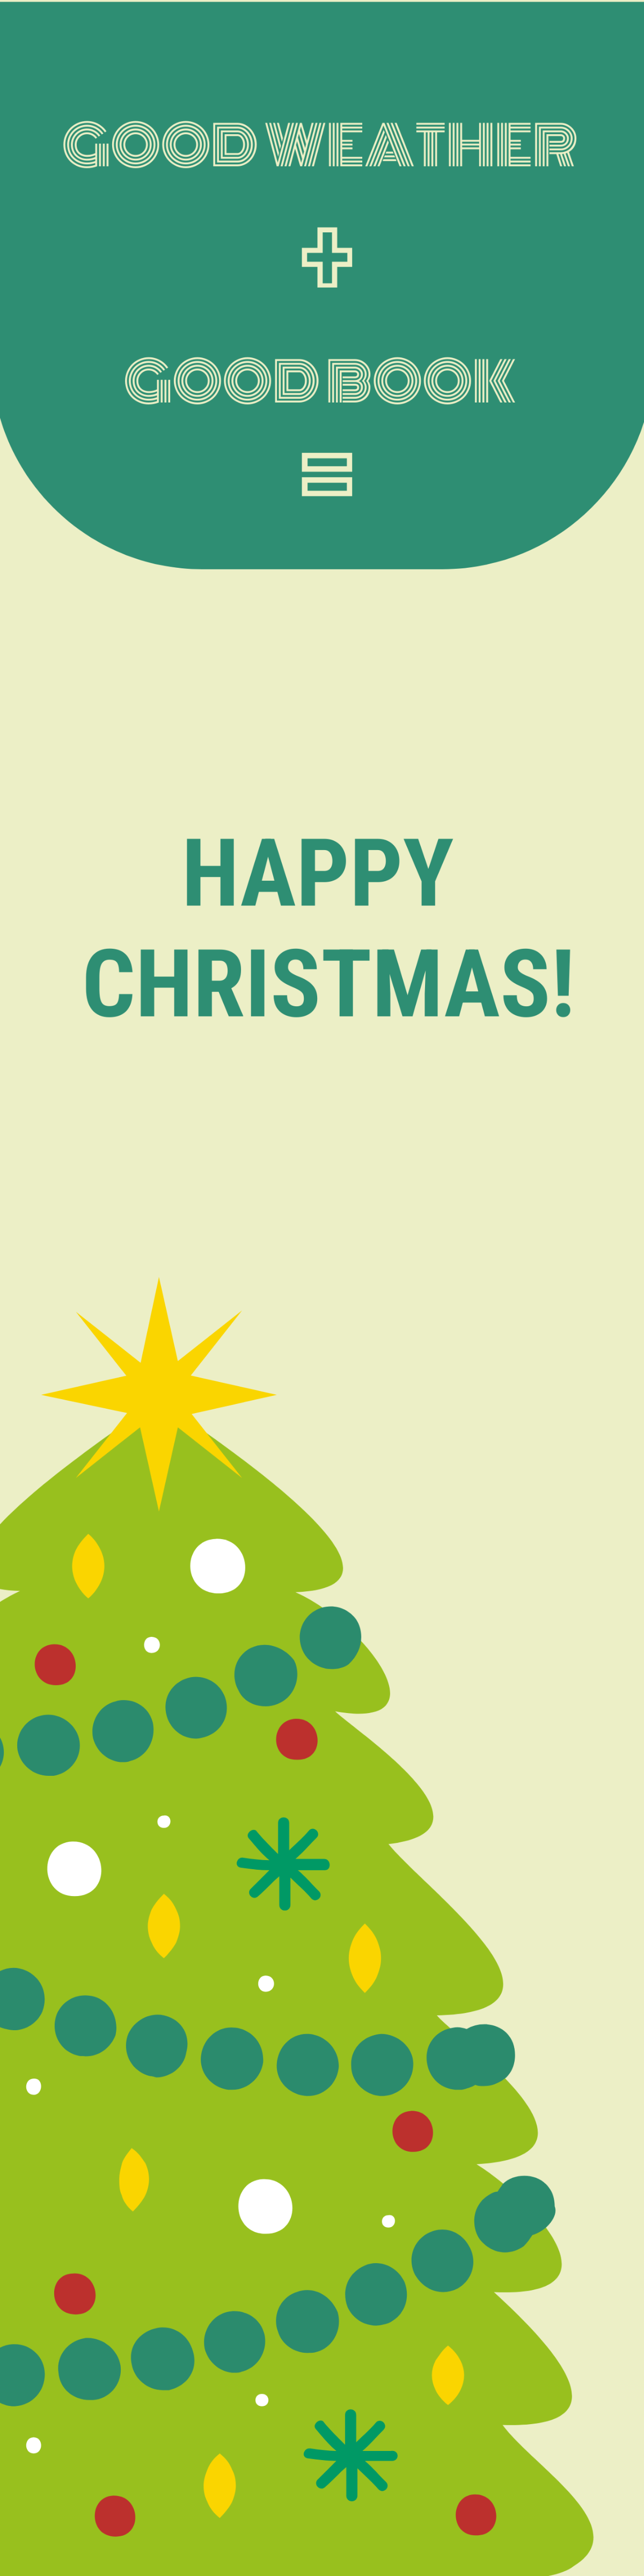 Free Christmas Tree Bookmark Template